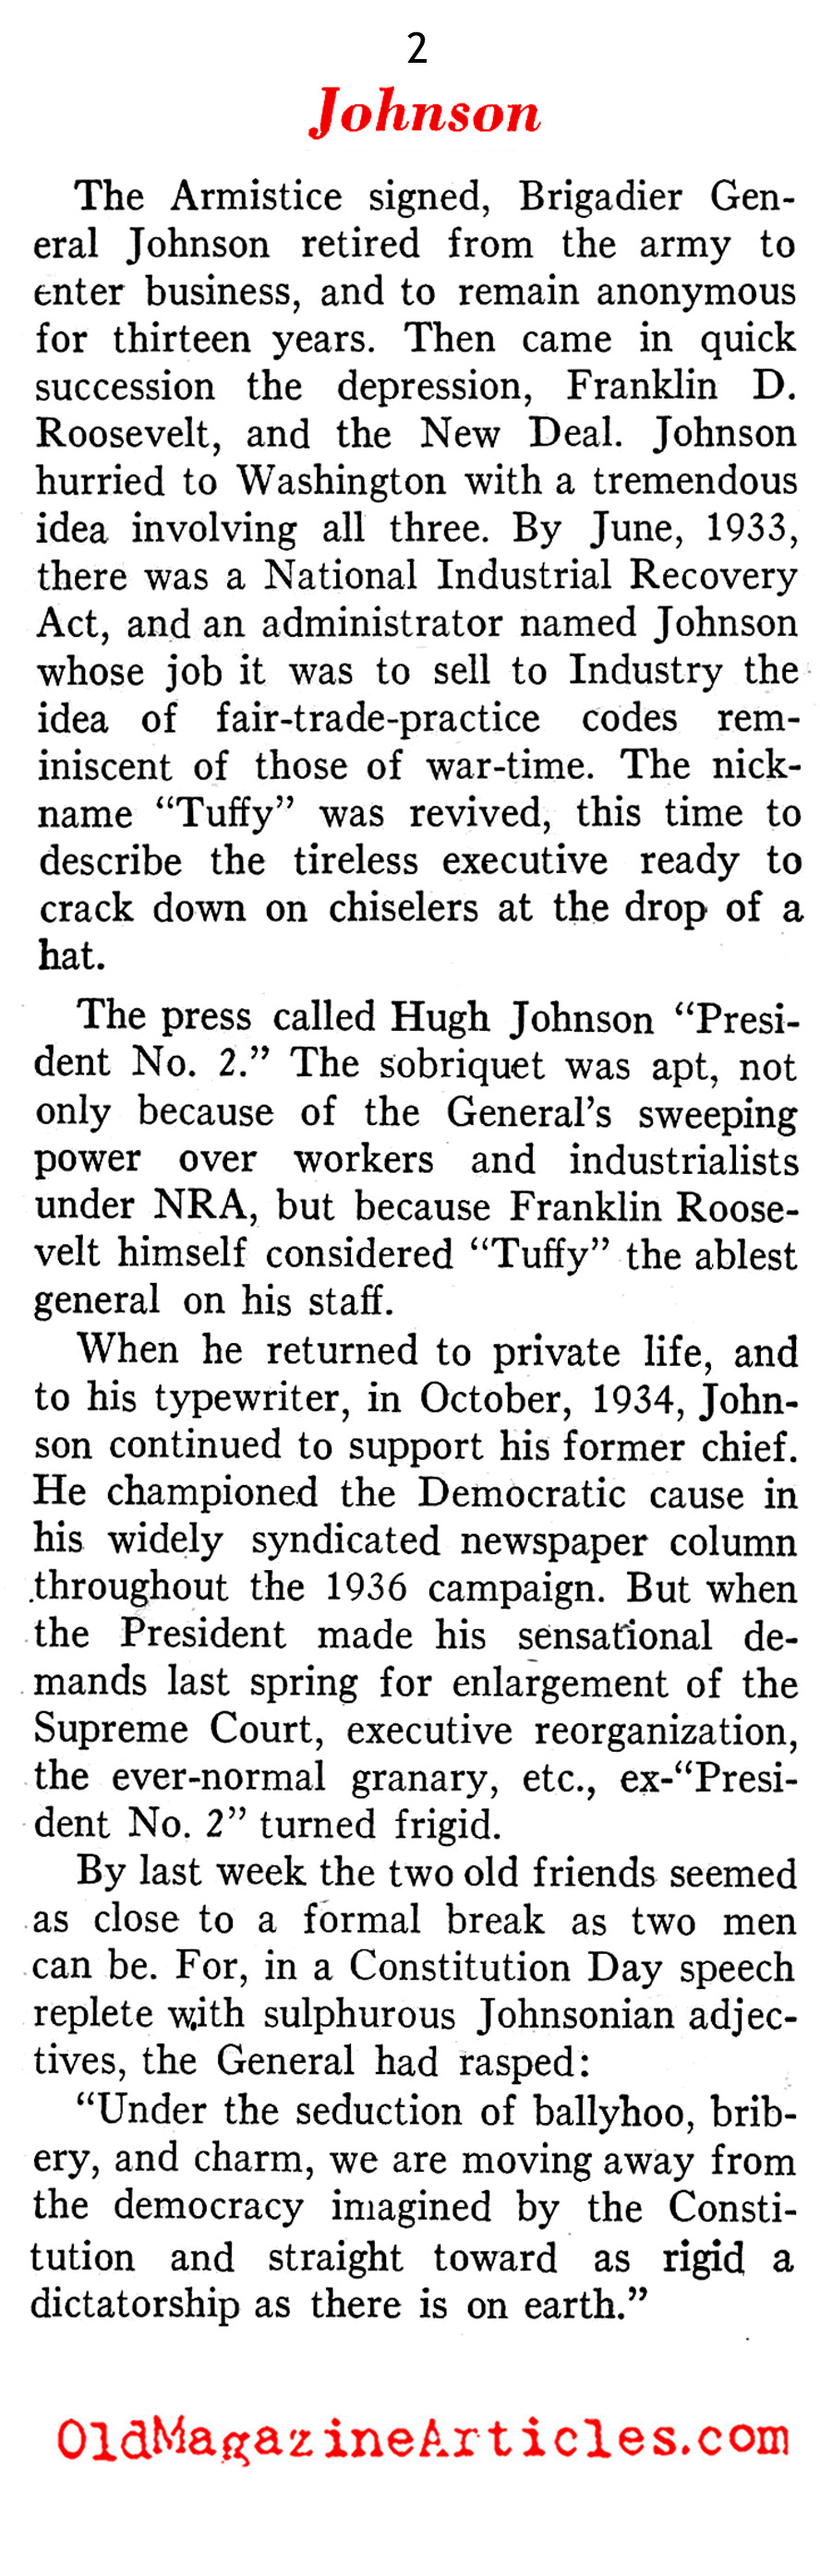 Hugh S. Johnson of the NRA (Literary Digest, 1937)